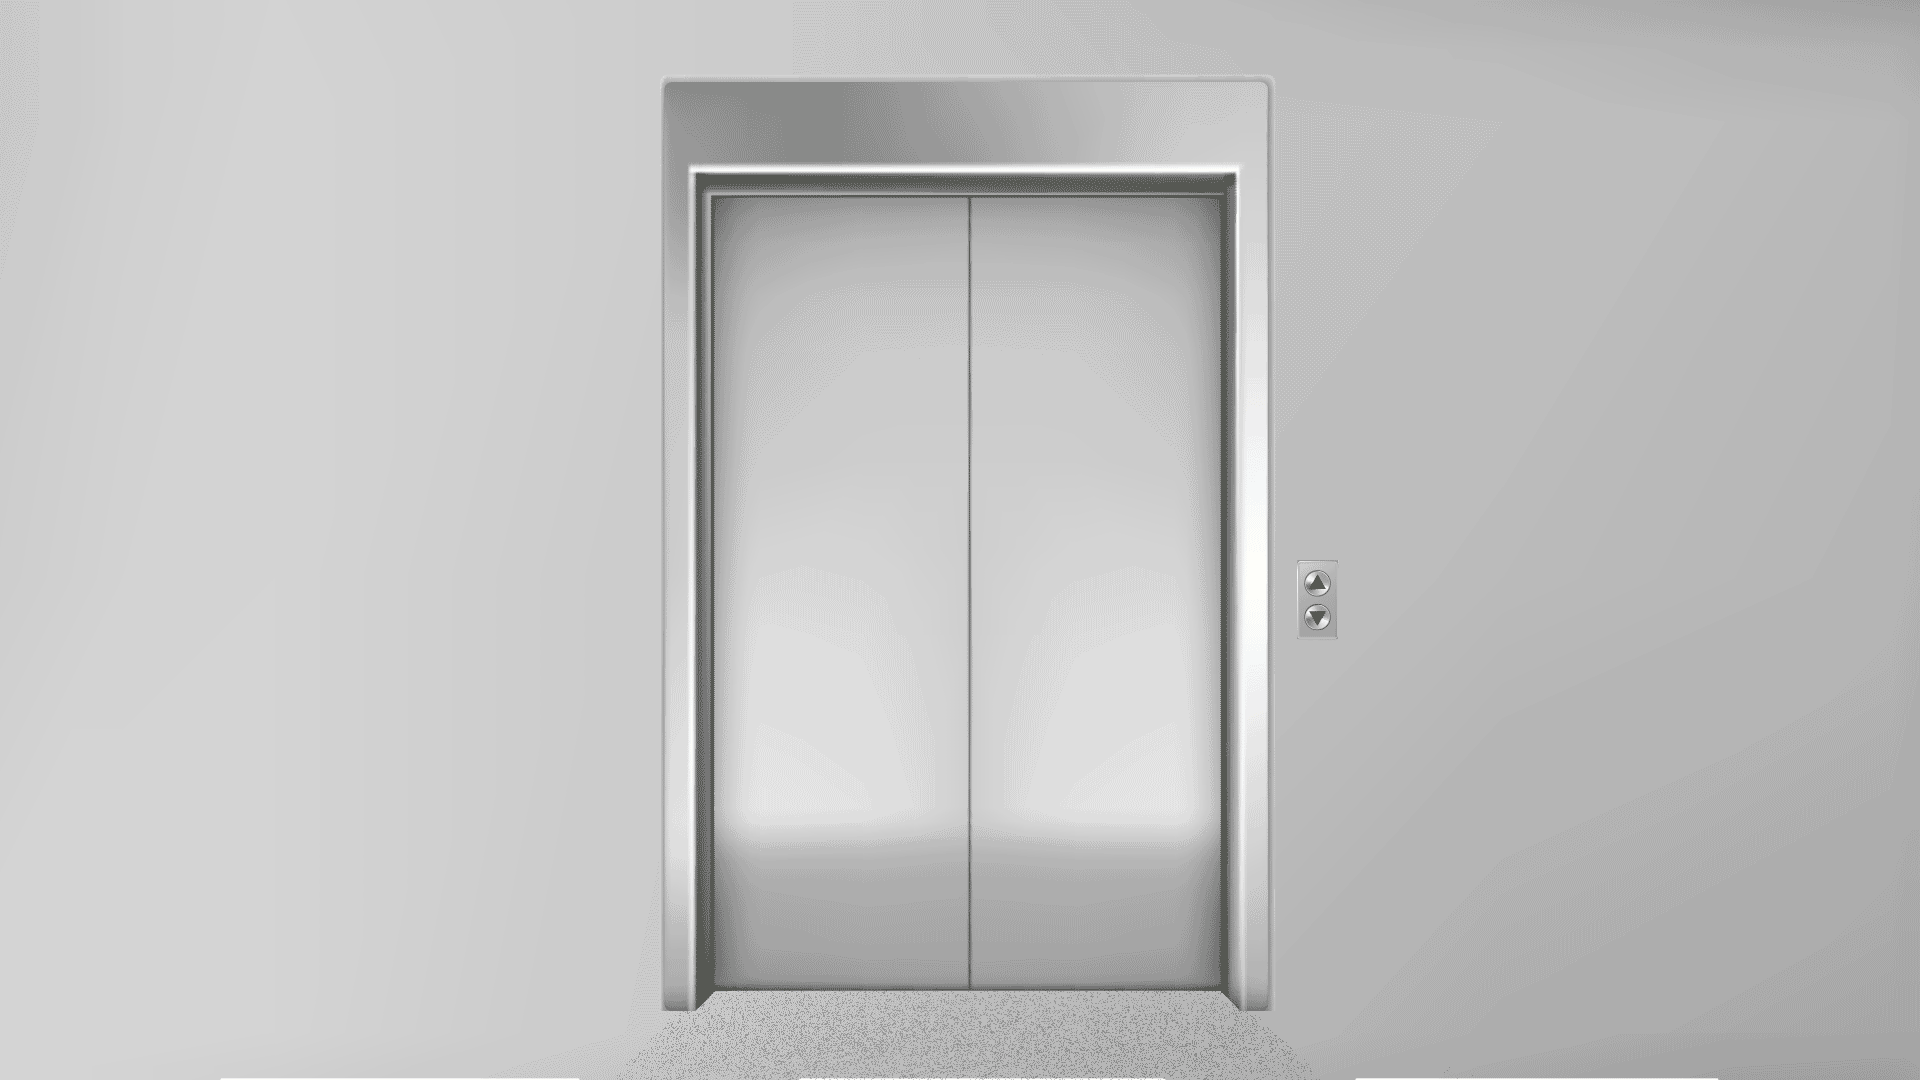 An elevator closing.